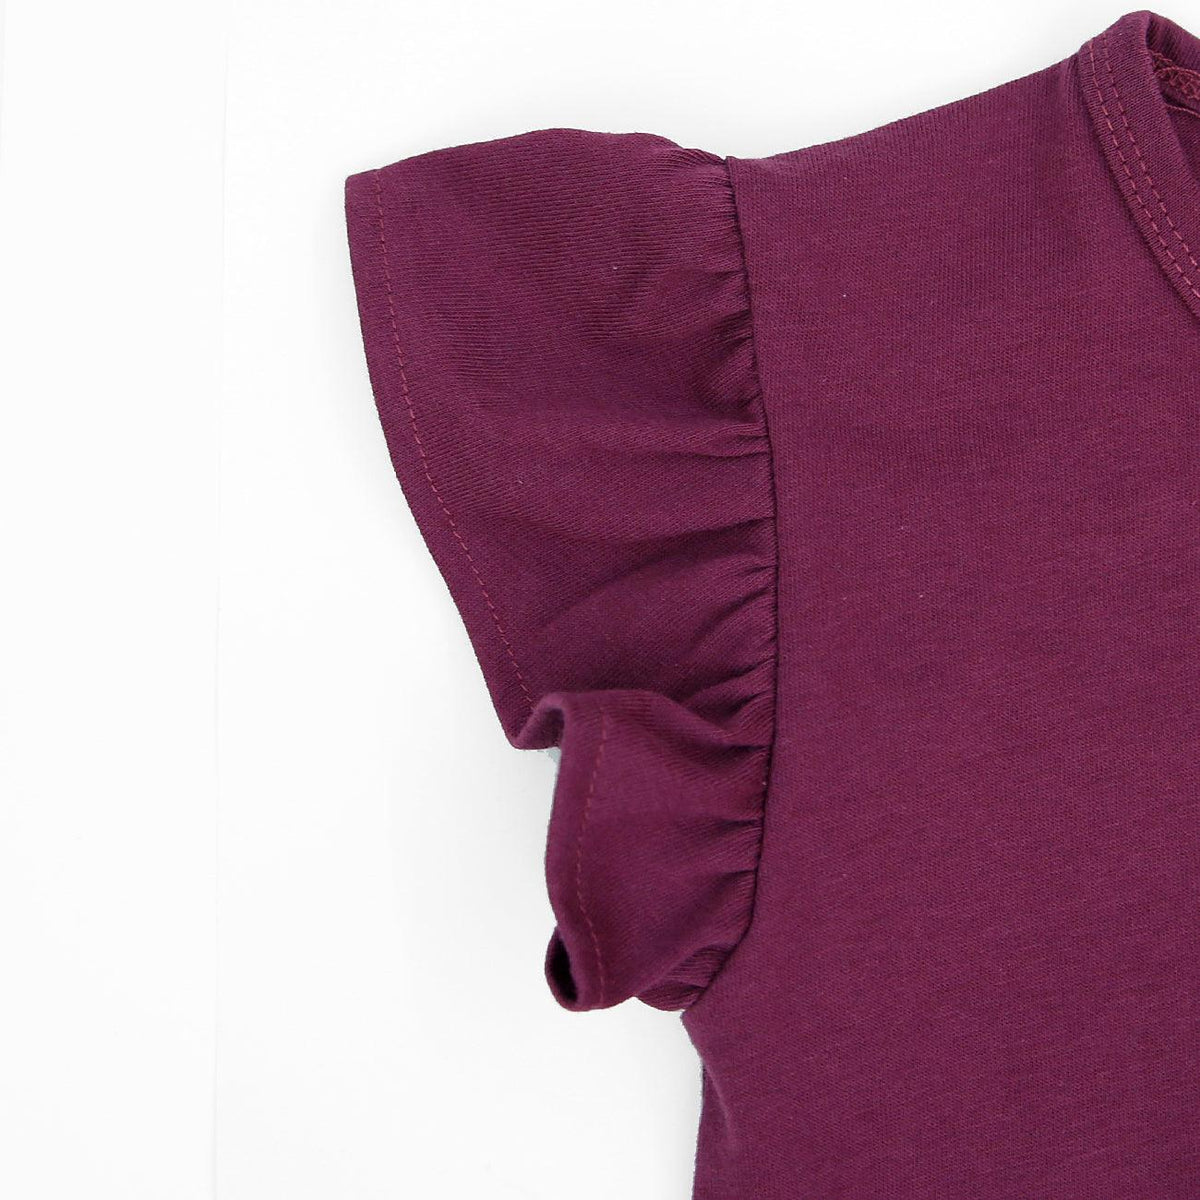 Girls Purple Soft Cotton Printed T-Shirt 9 MONTH - 10 YRS (MI-11398) - Brands River